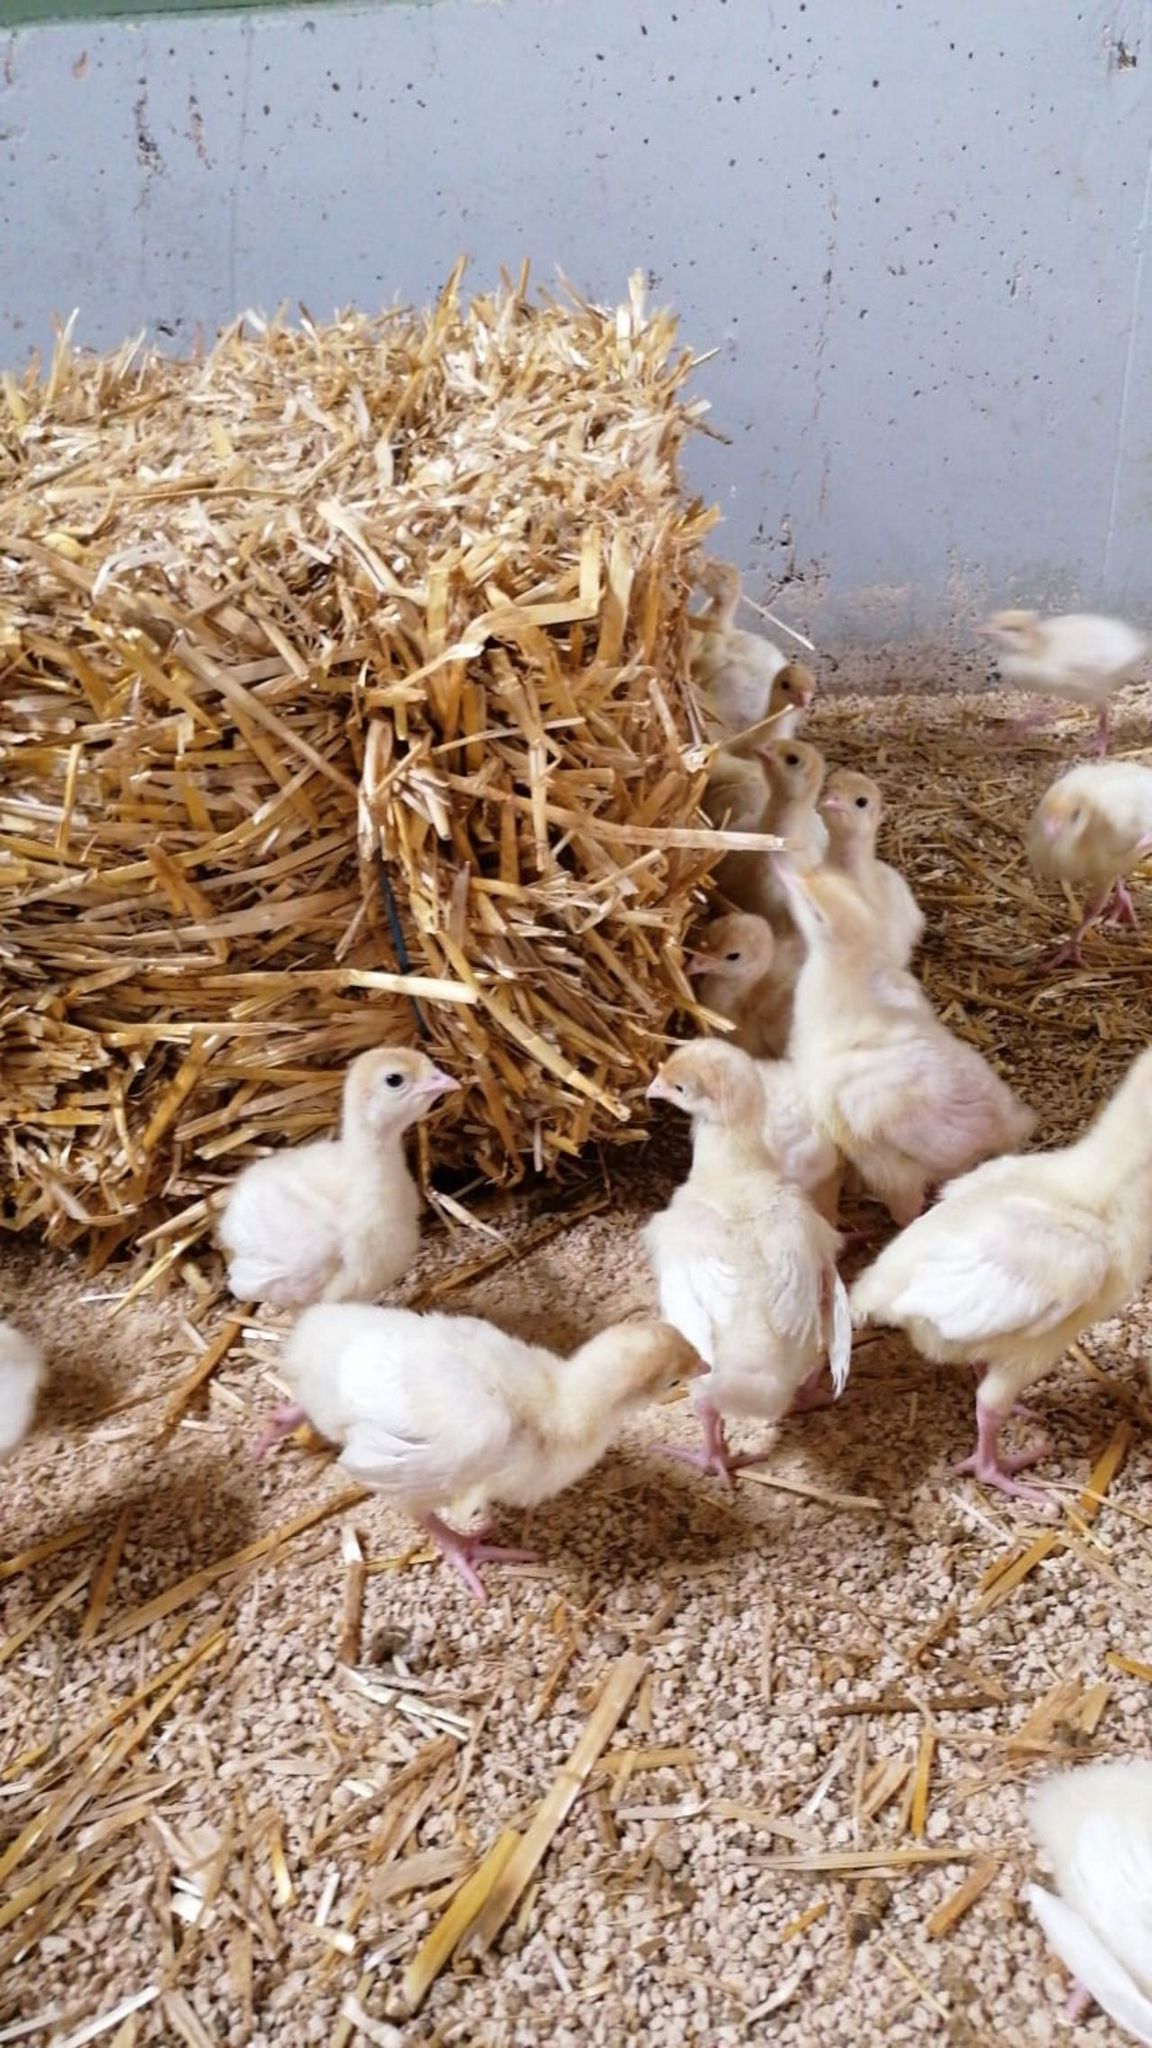 Turkeys in the barn